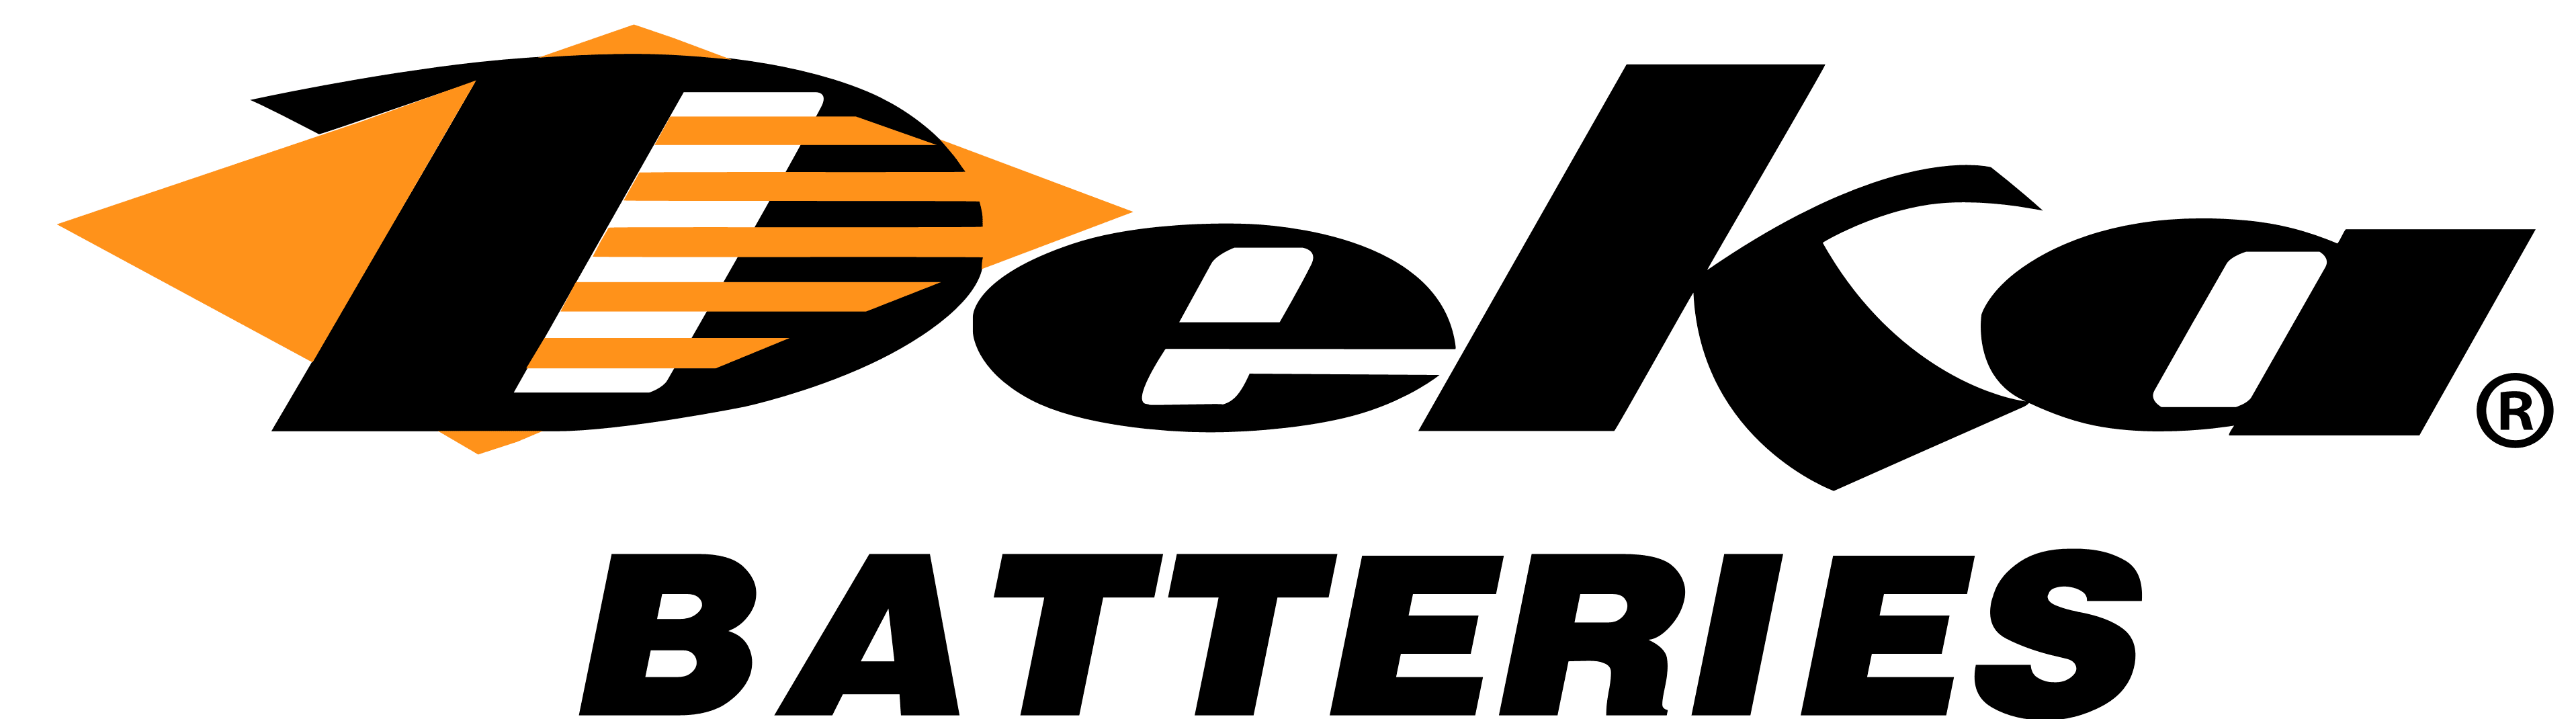 Deka Batteries Logo.png